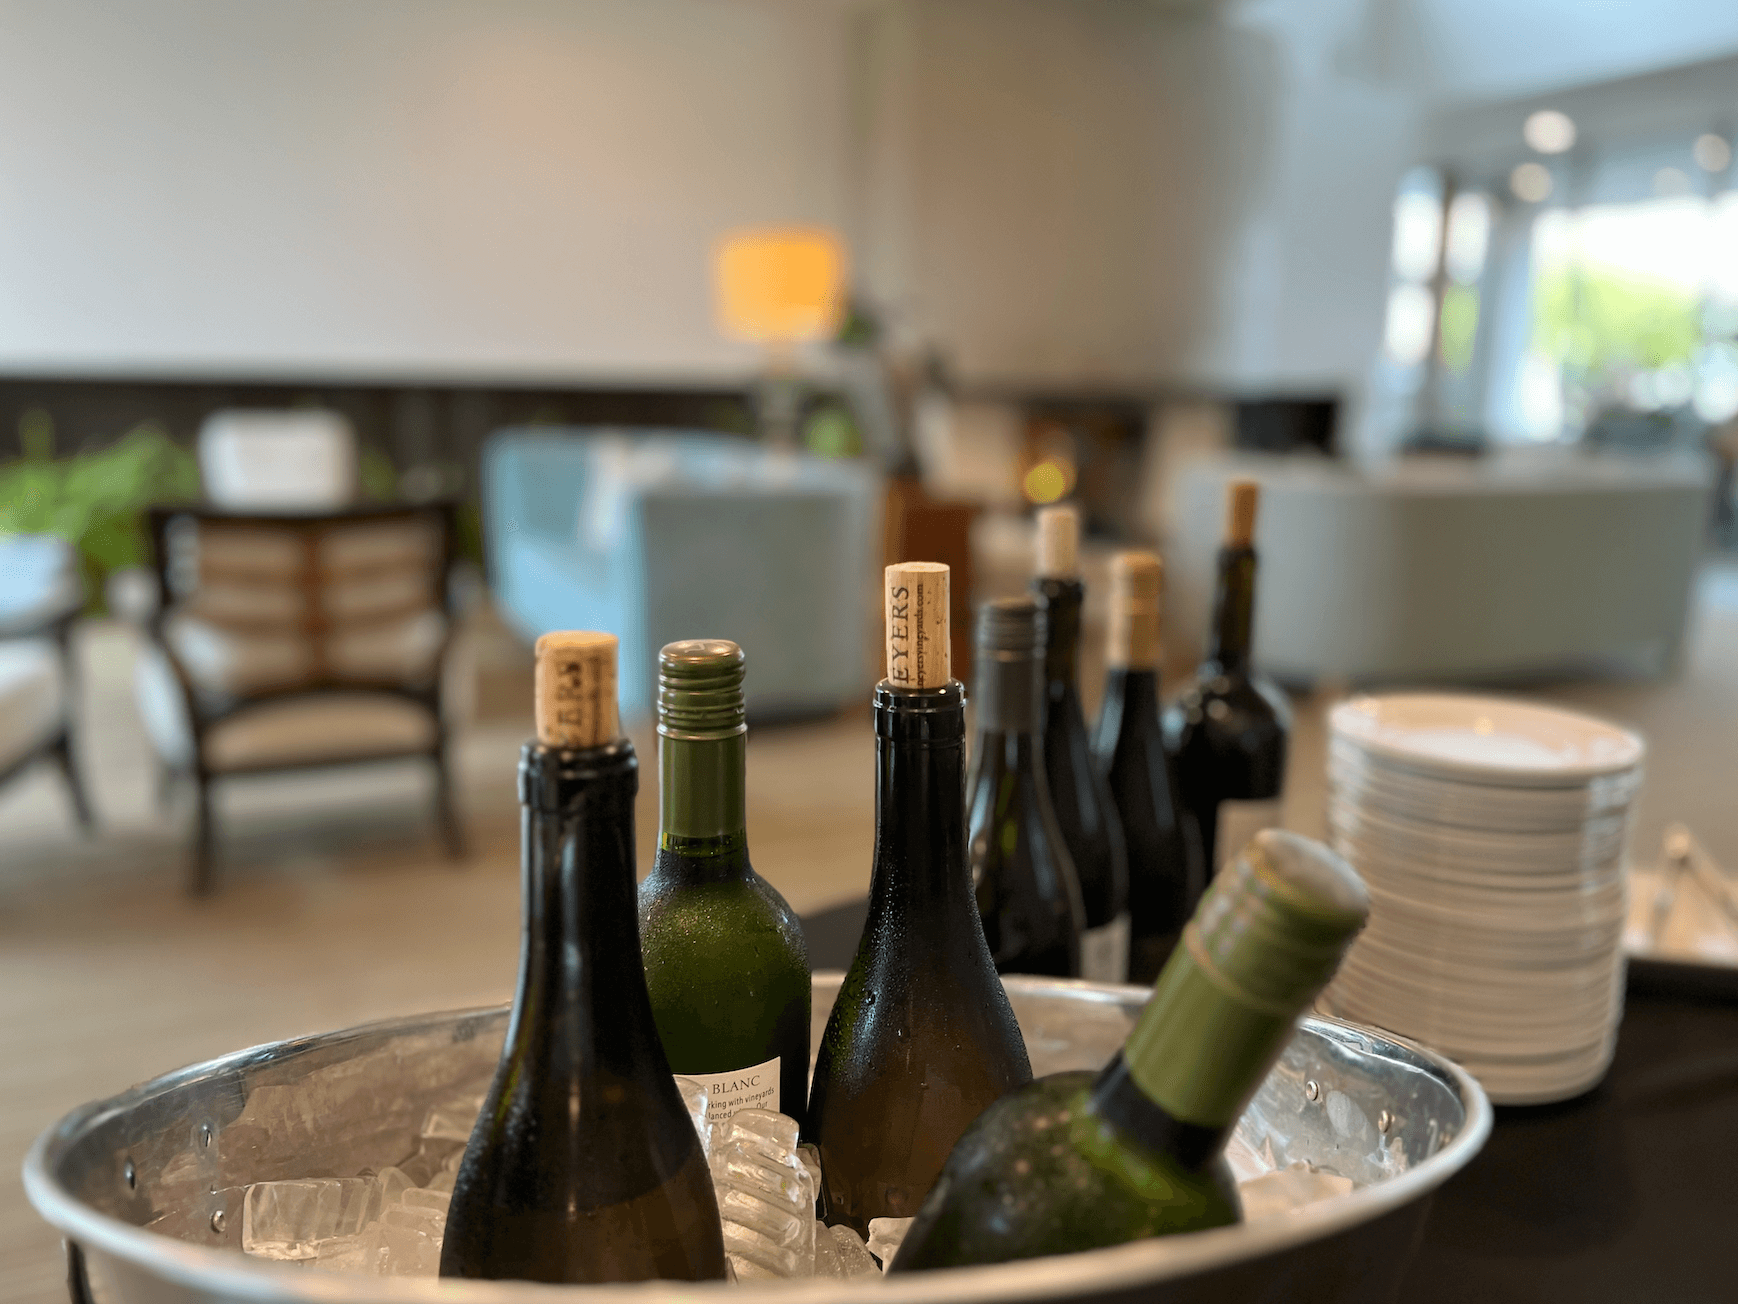 Wine Reception each evening at Acqua Hotel